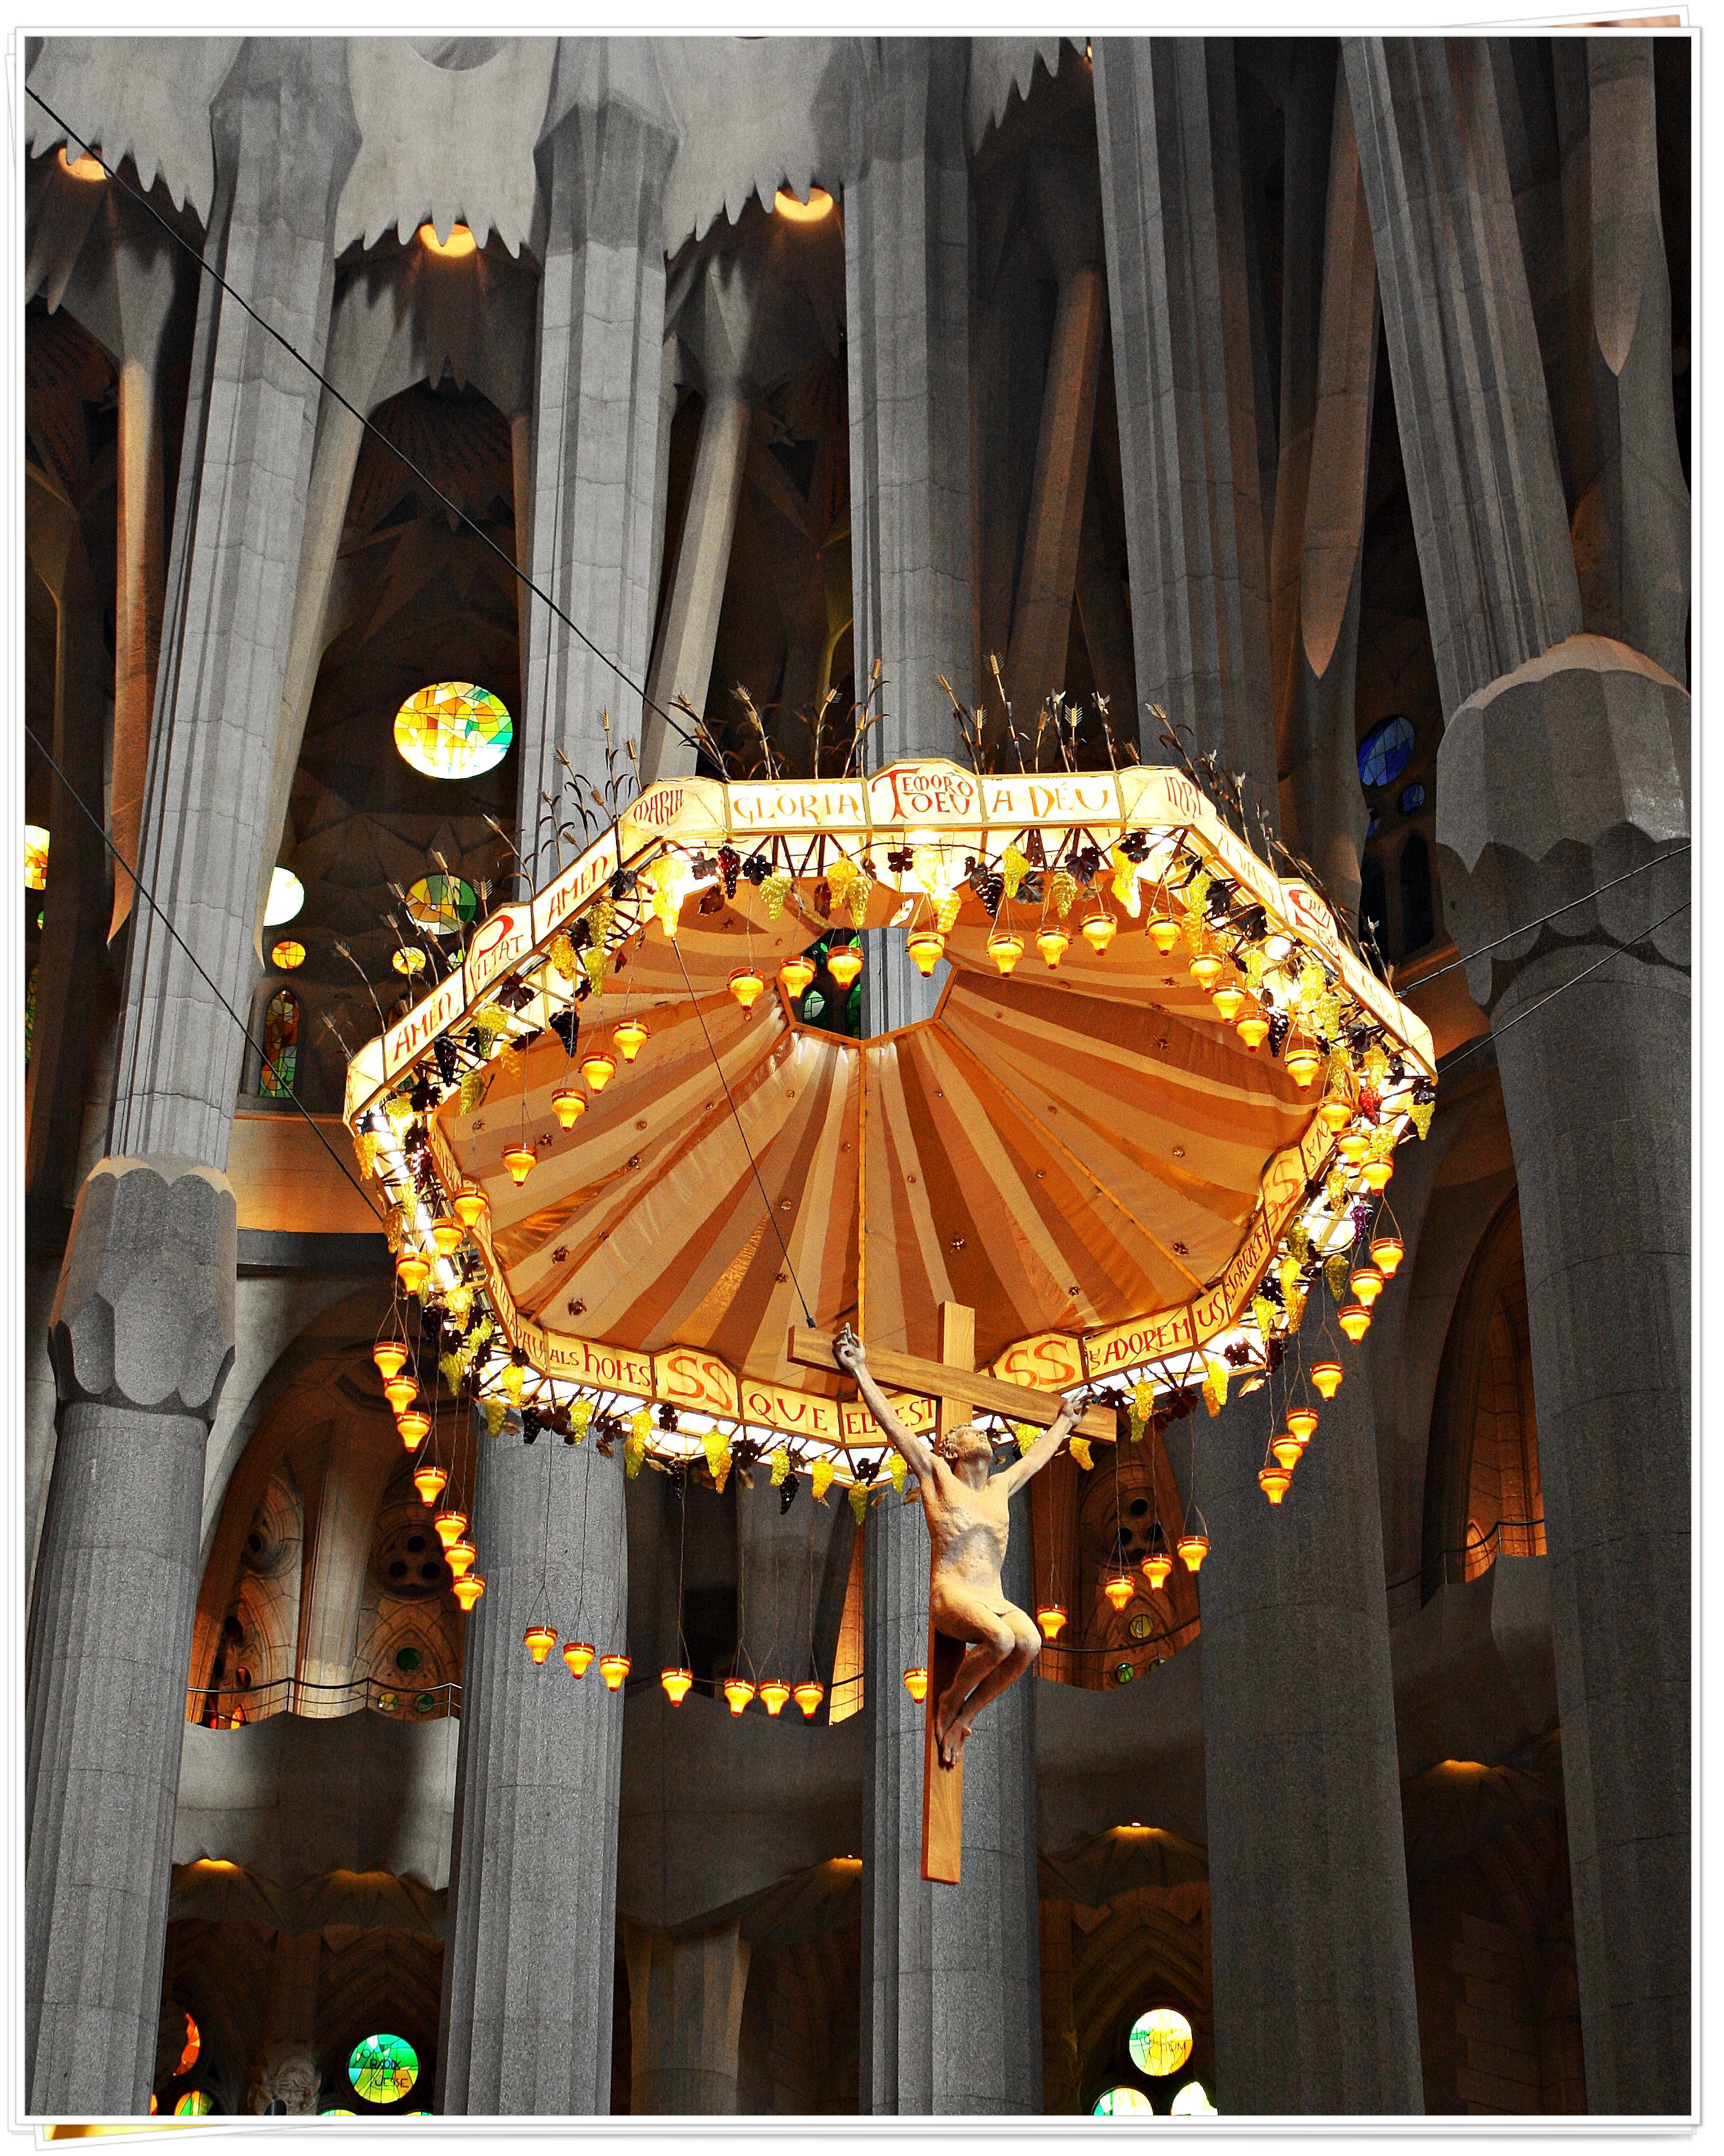 Basilica de la Sagrada Familia - Barcelona, Spain 2013